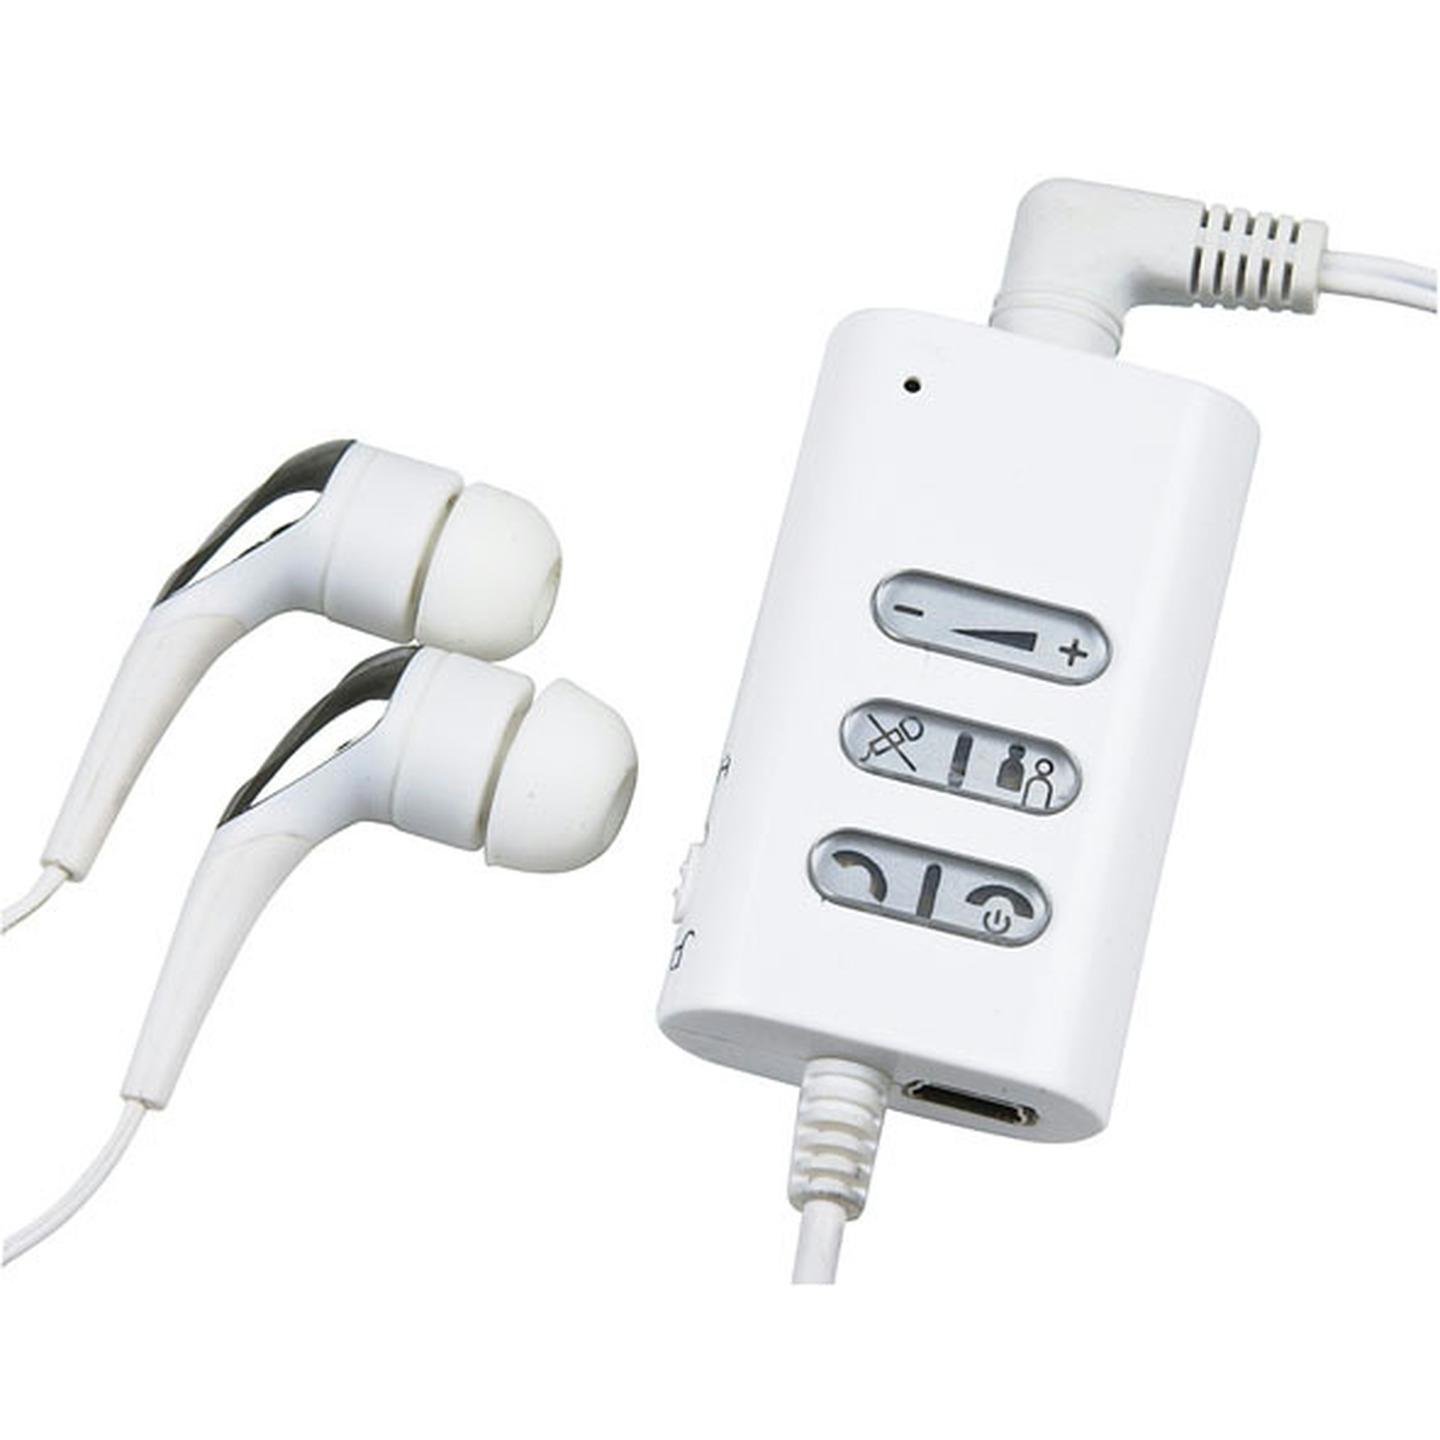 USB Bluetooth Handsfree Stereo Earphones